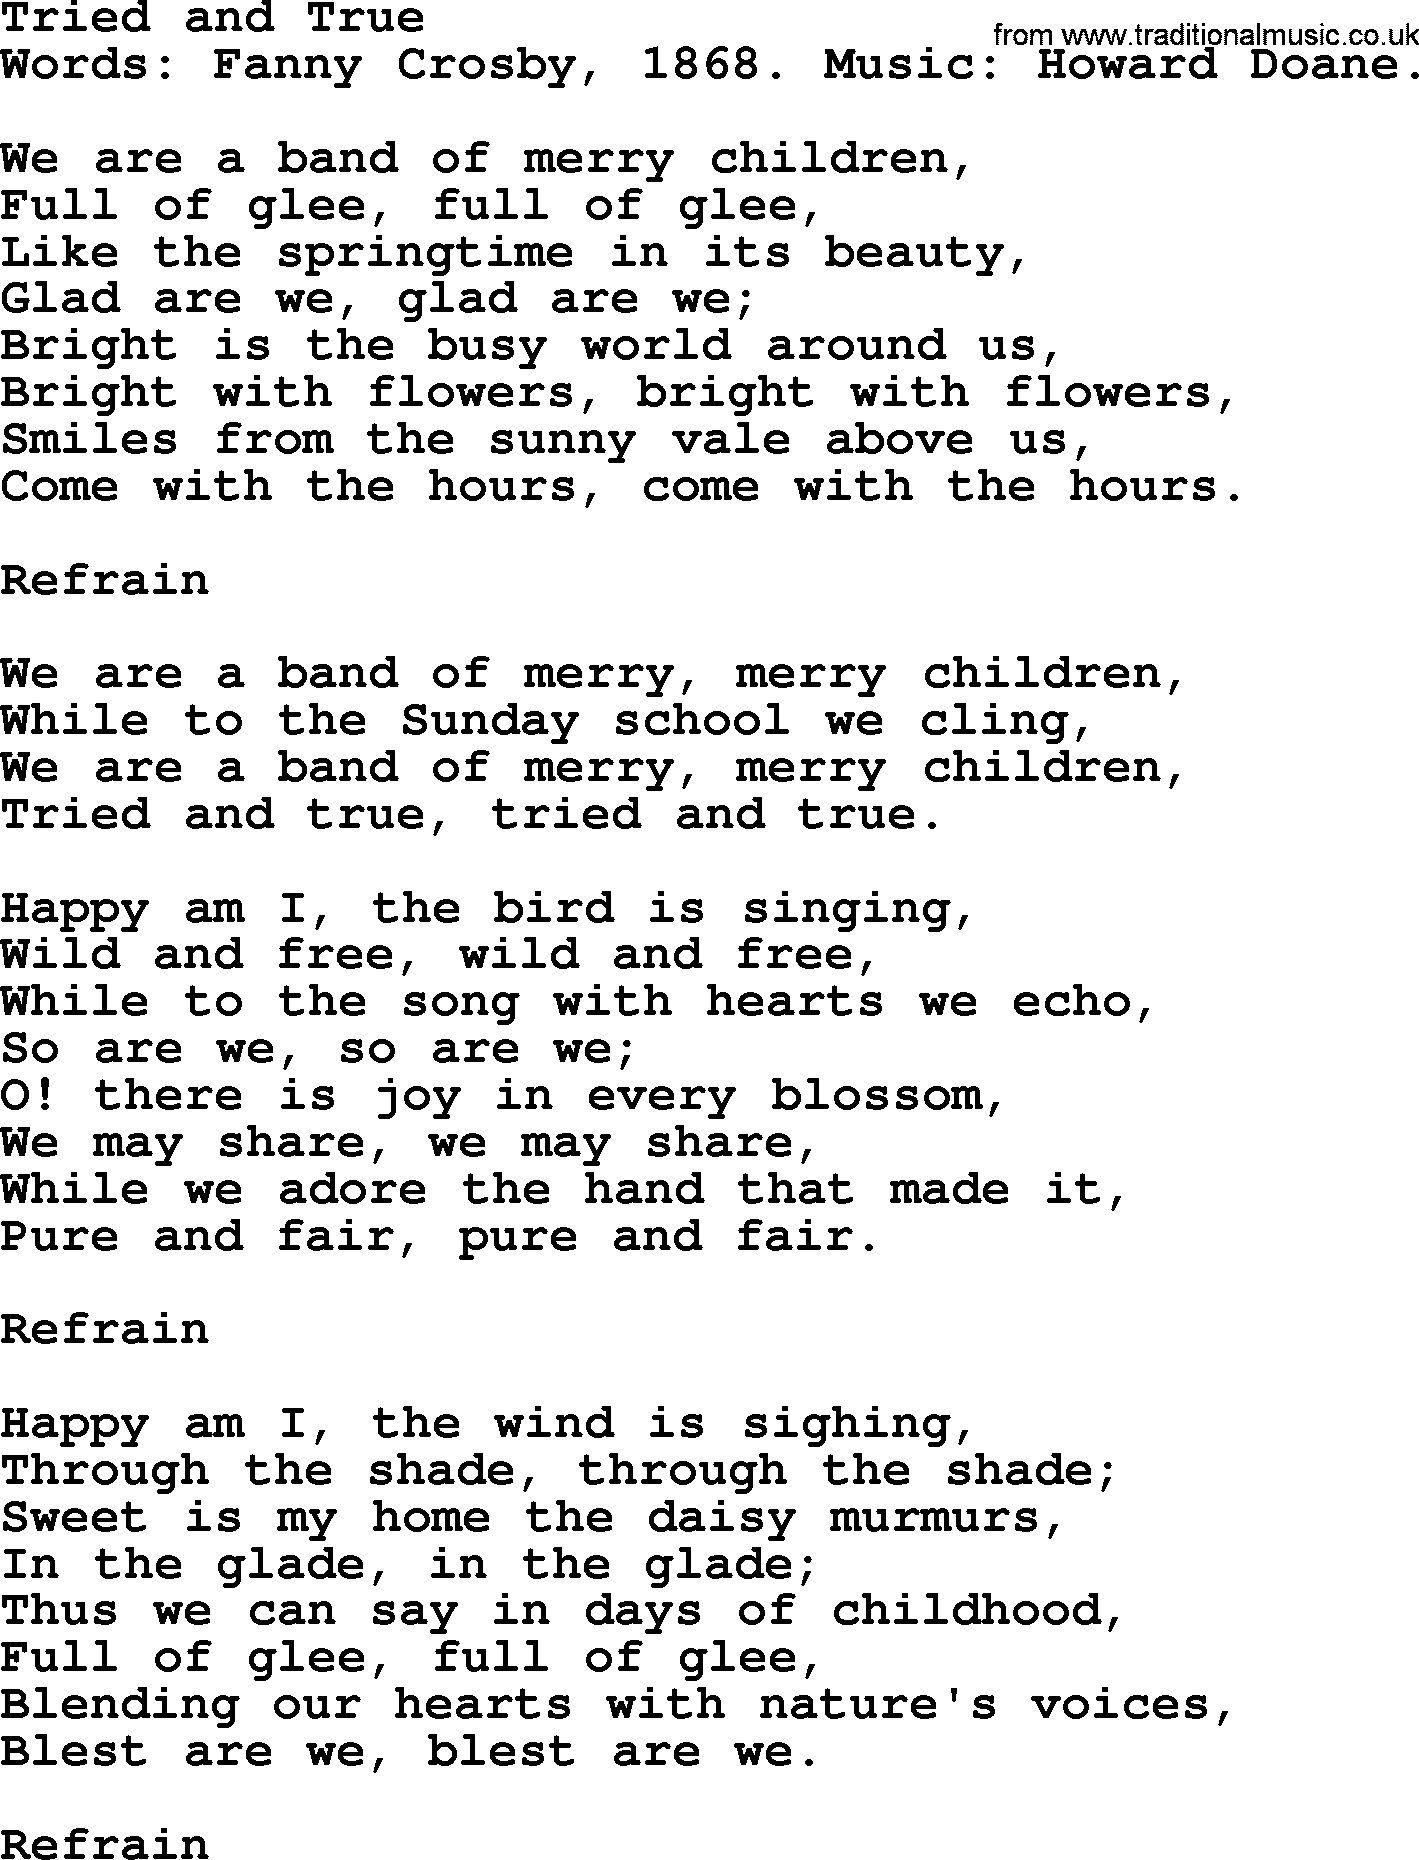 Fanny Crosby song: Tried And True, lyrics